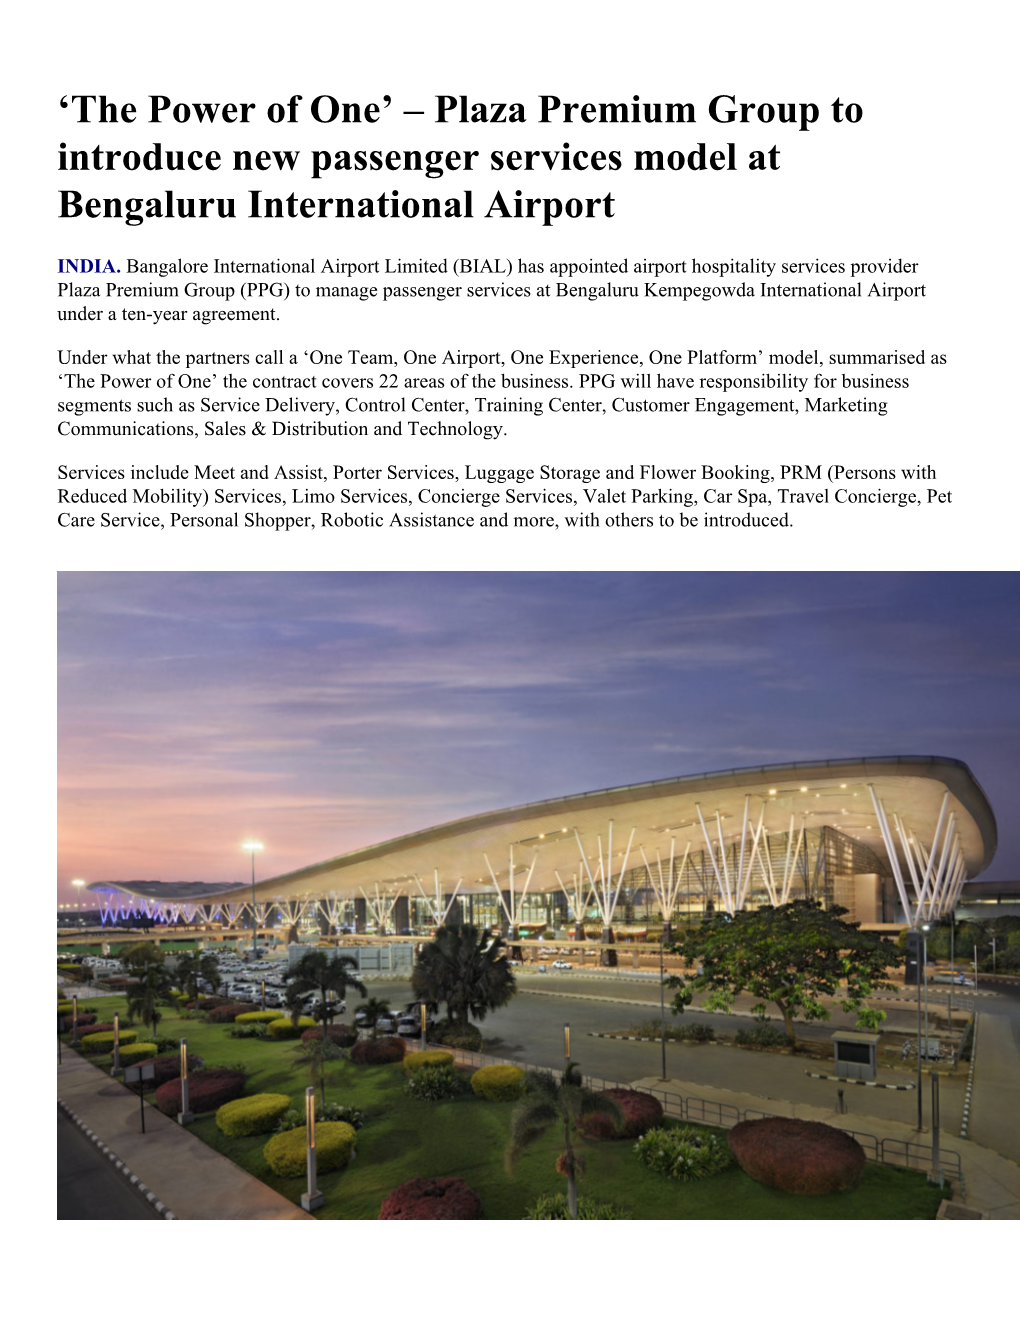 Plaza Premium Group to Introduce New Passenger Services Model at Bengaluru International Airport